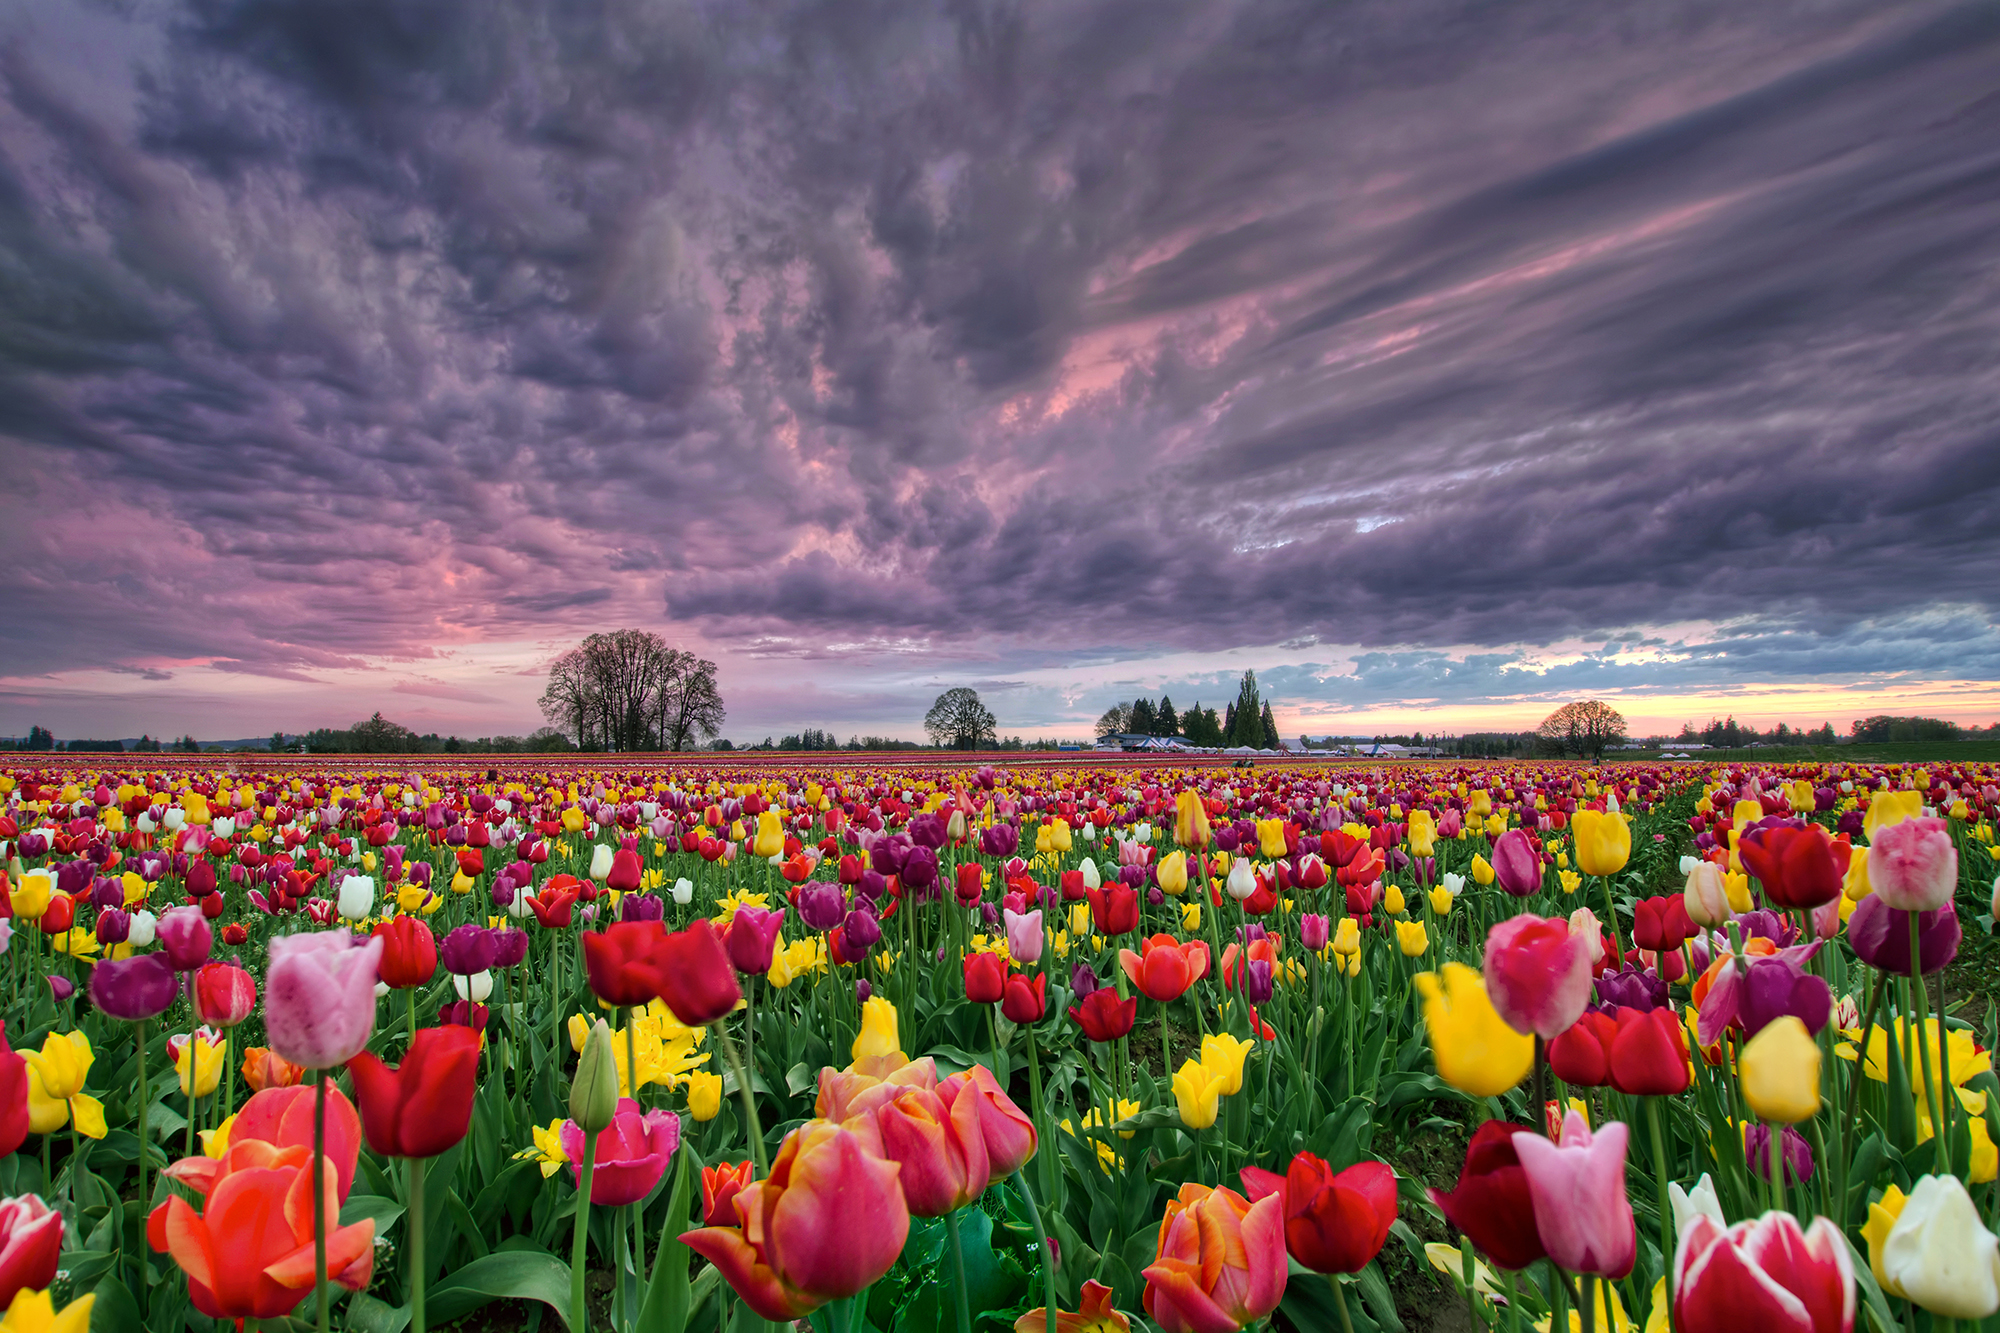 25 Gorgeous Photos of Spring Wildflowers - Topaz Labs Blog